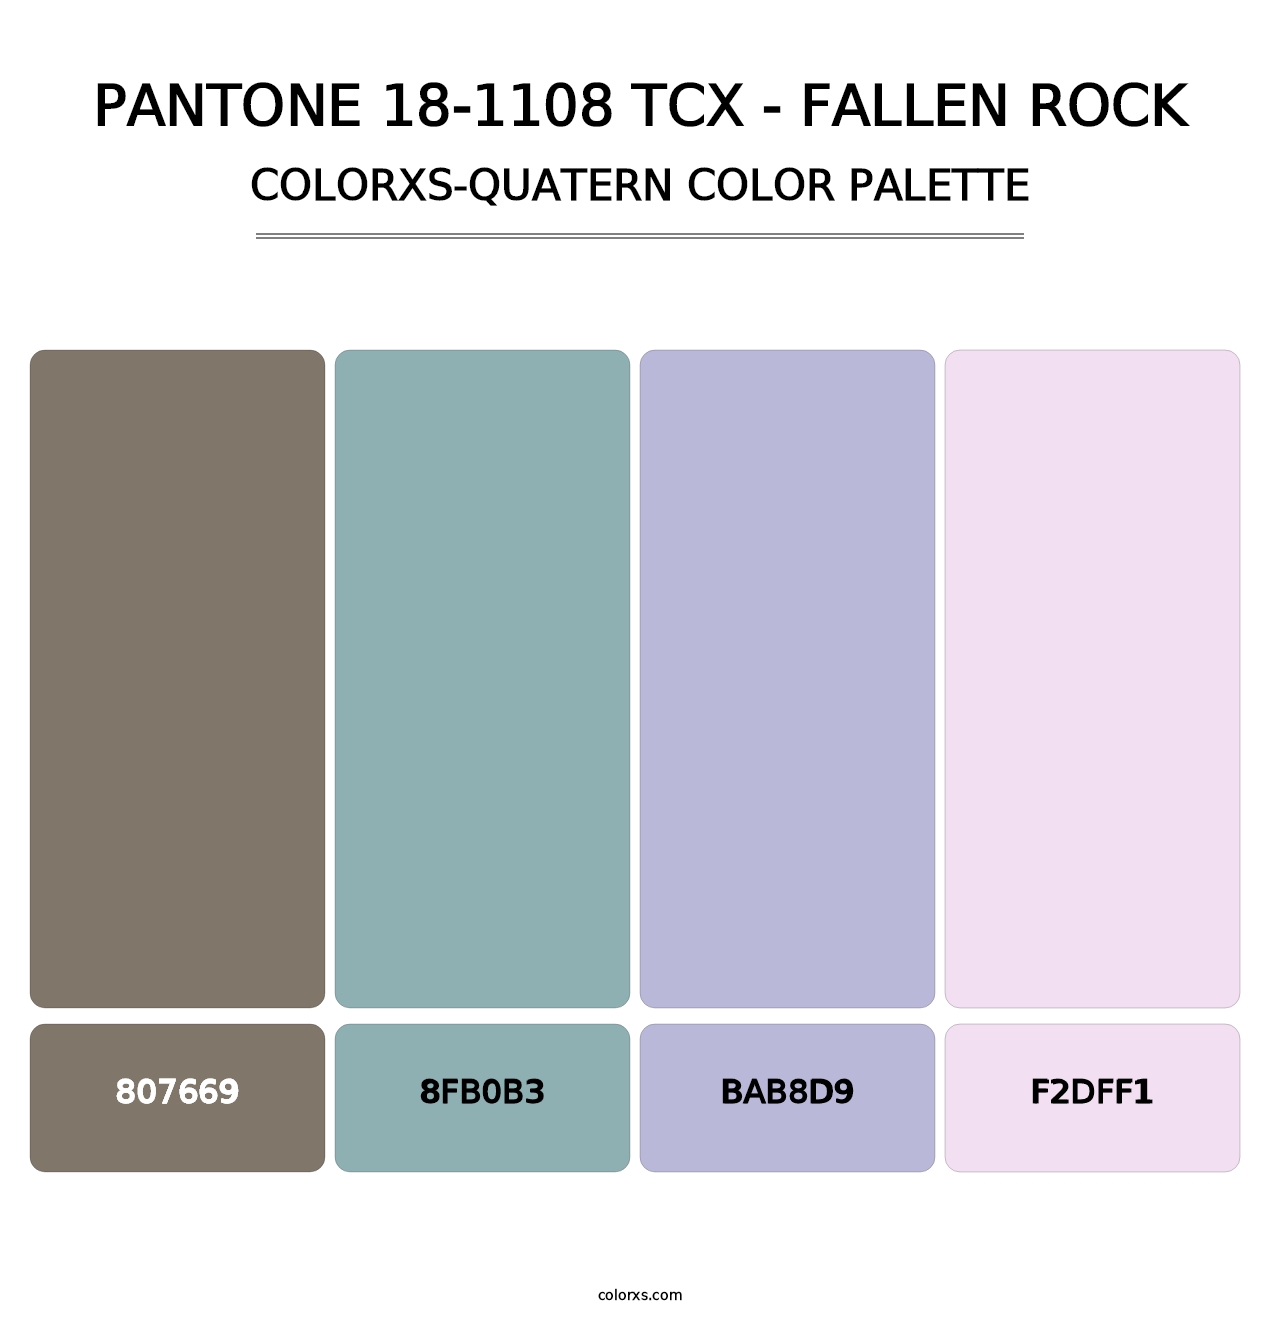 PANTONE 18-1108 TCX - Fallen Rock - Colorxs Quatern Palette